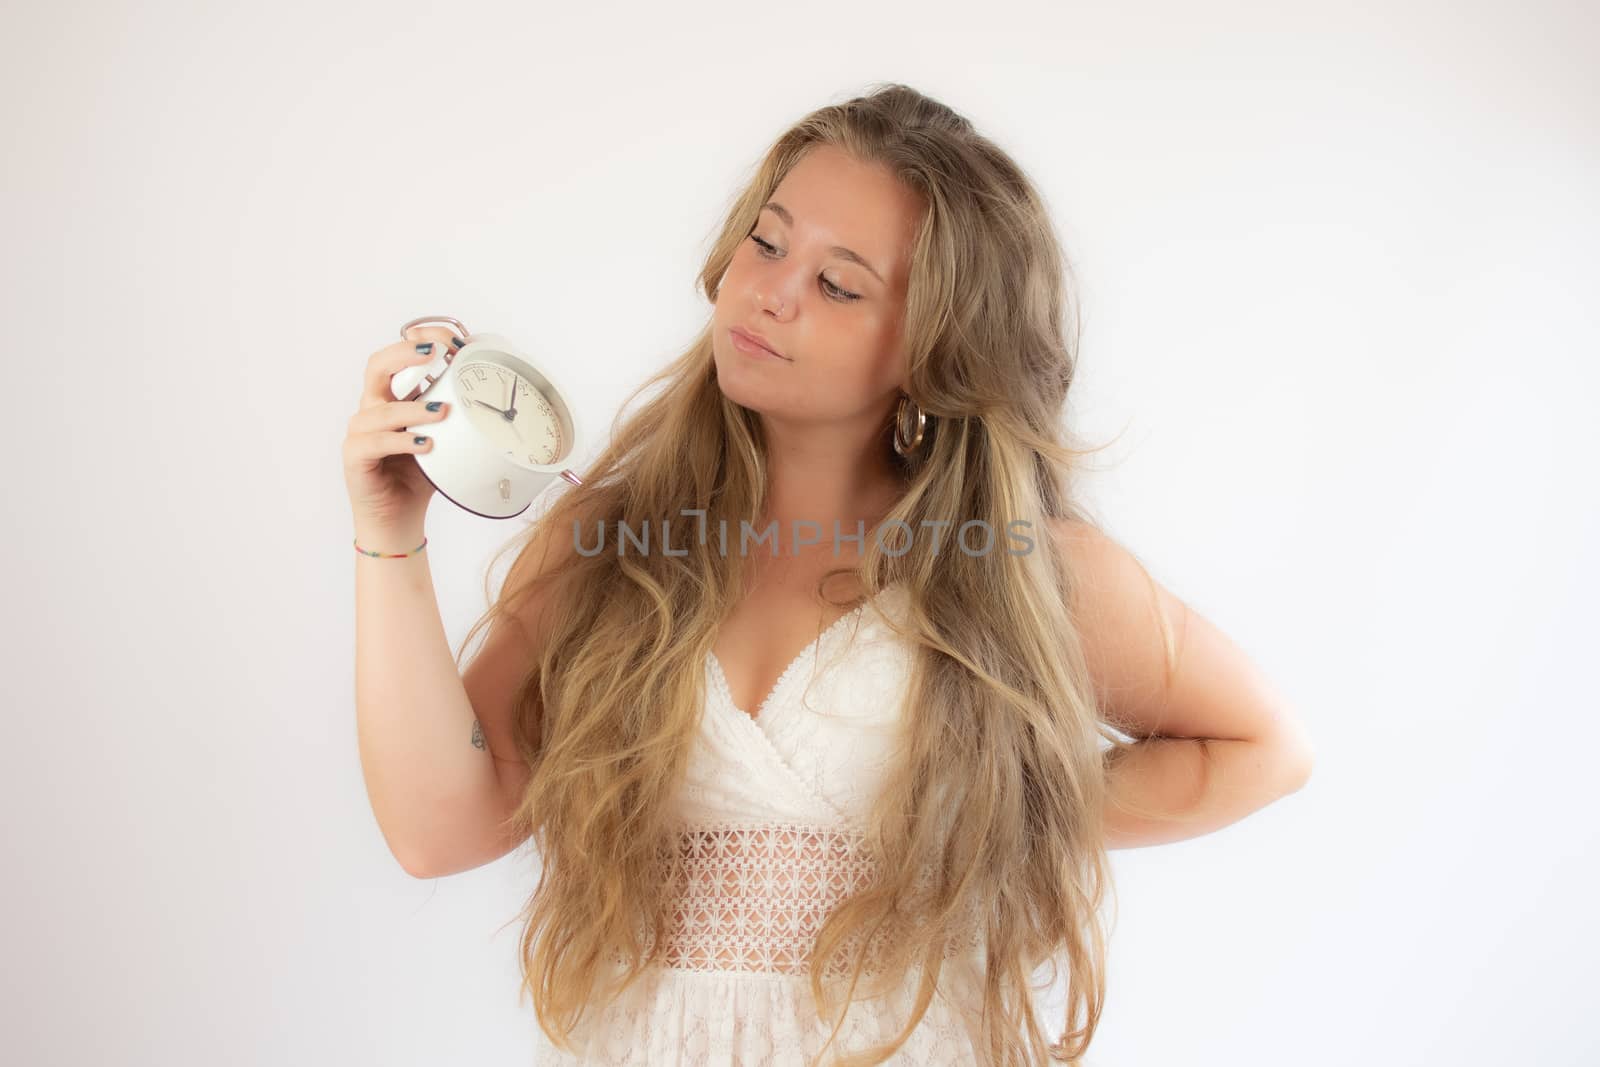 Pretty blonde girl in a white dress showing a clock